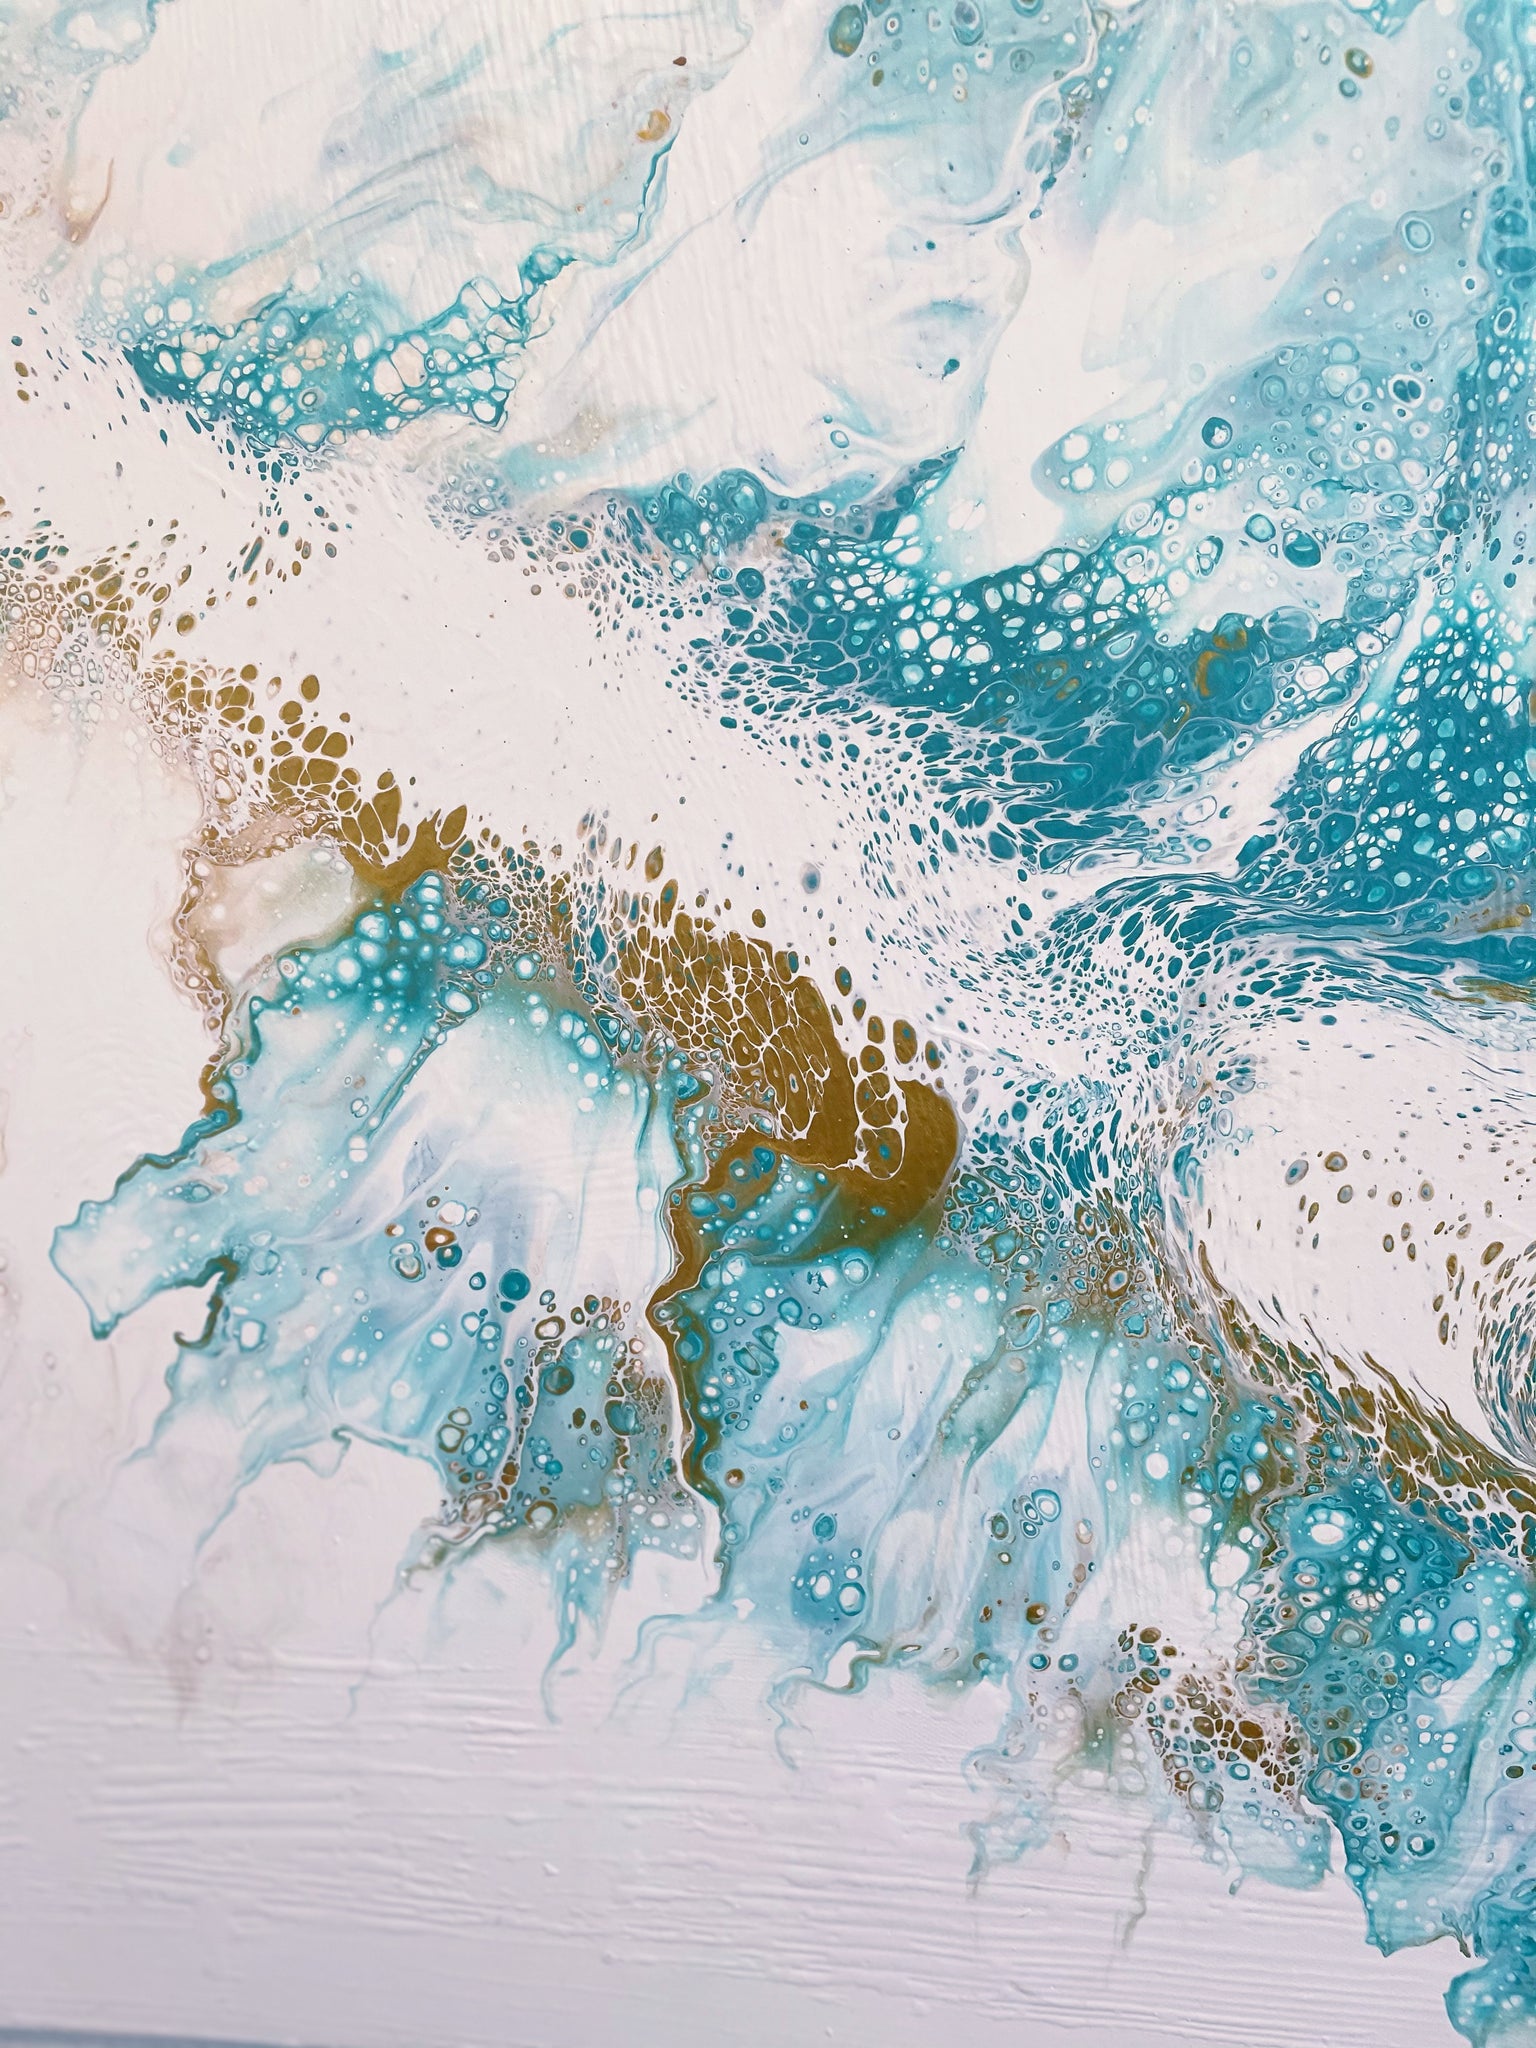 Canvas Painting "Splash"